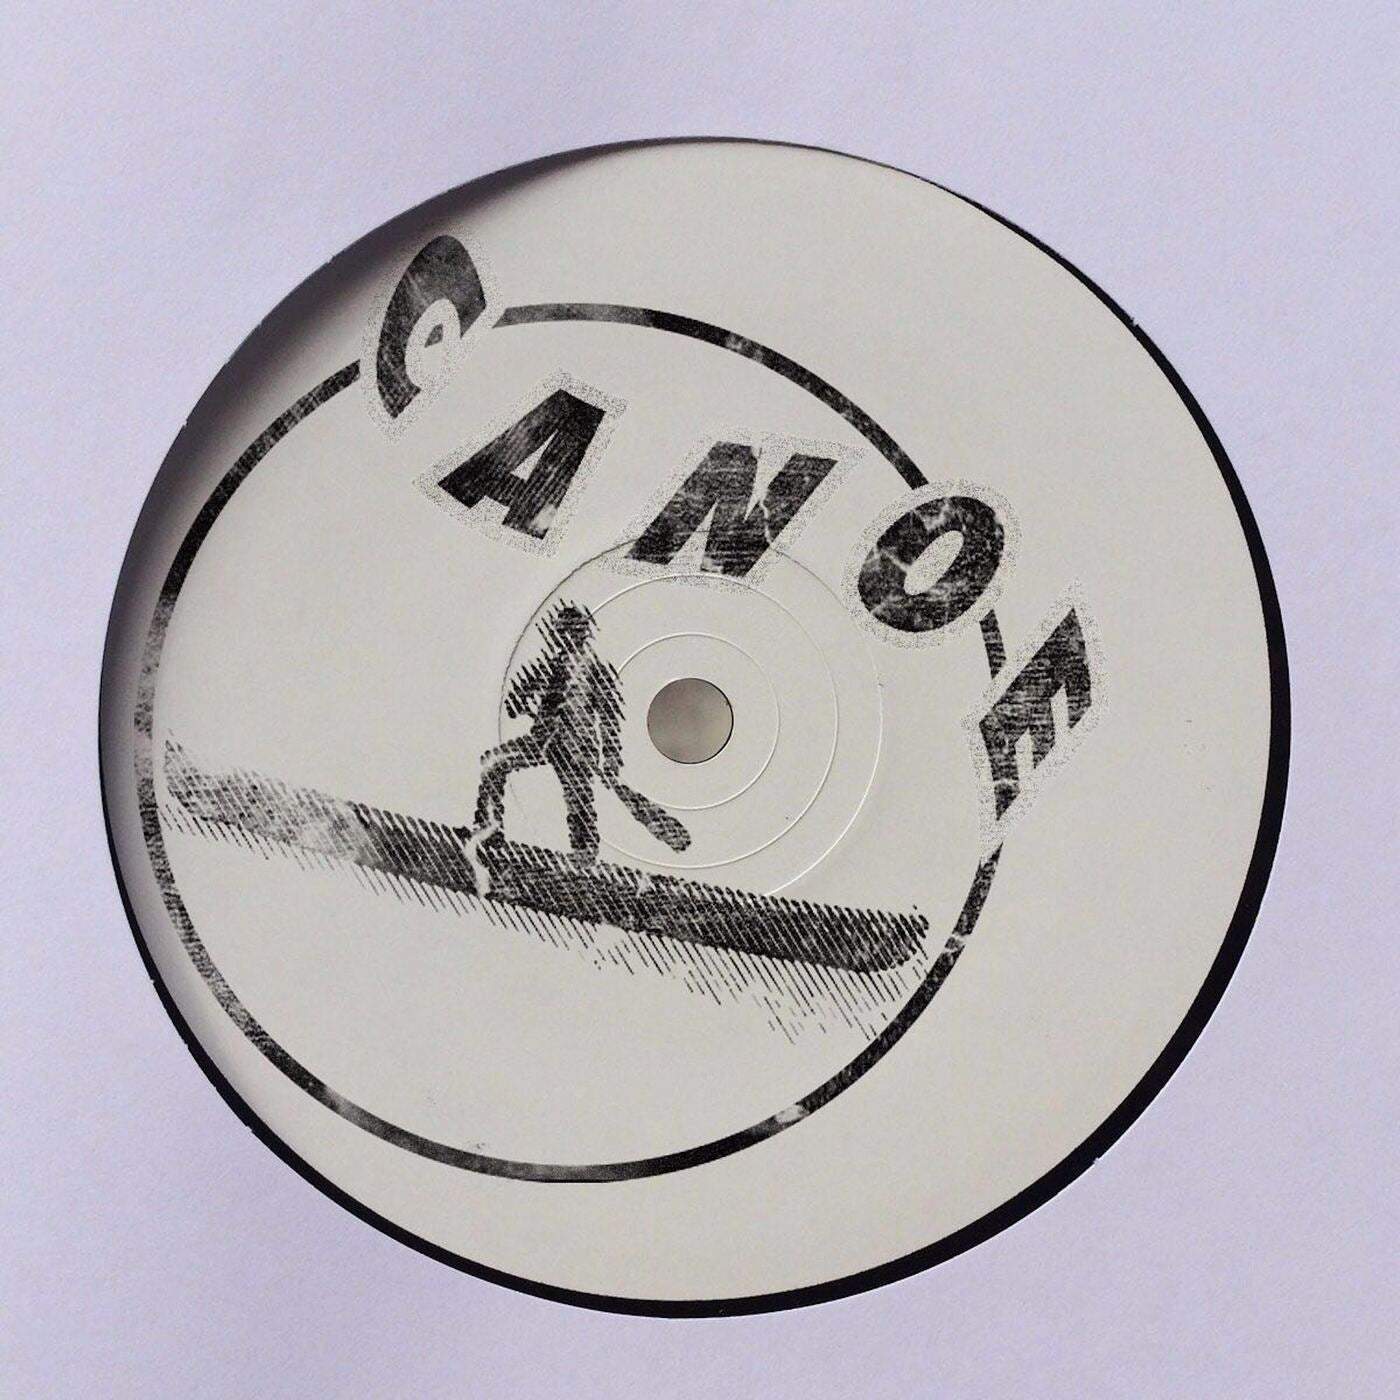 Download Canoe 13 on Electrobuzz